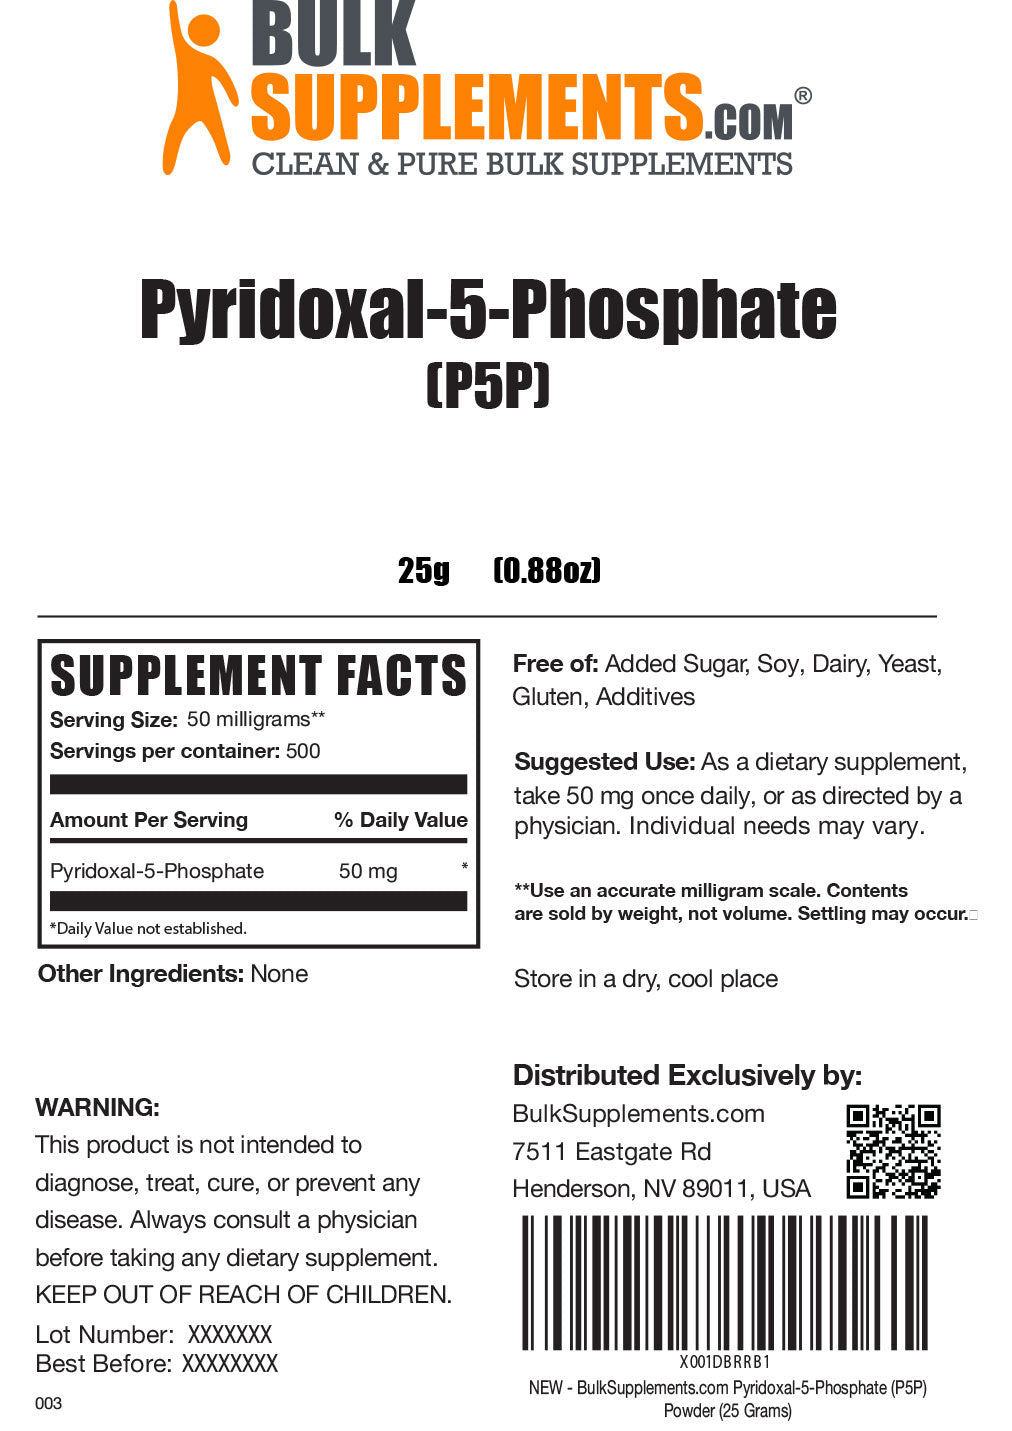 Pyridoxal-5-Phosphate (P5P) powder label 25g